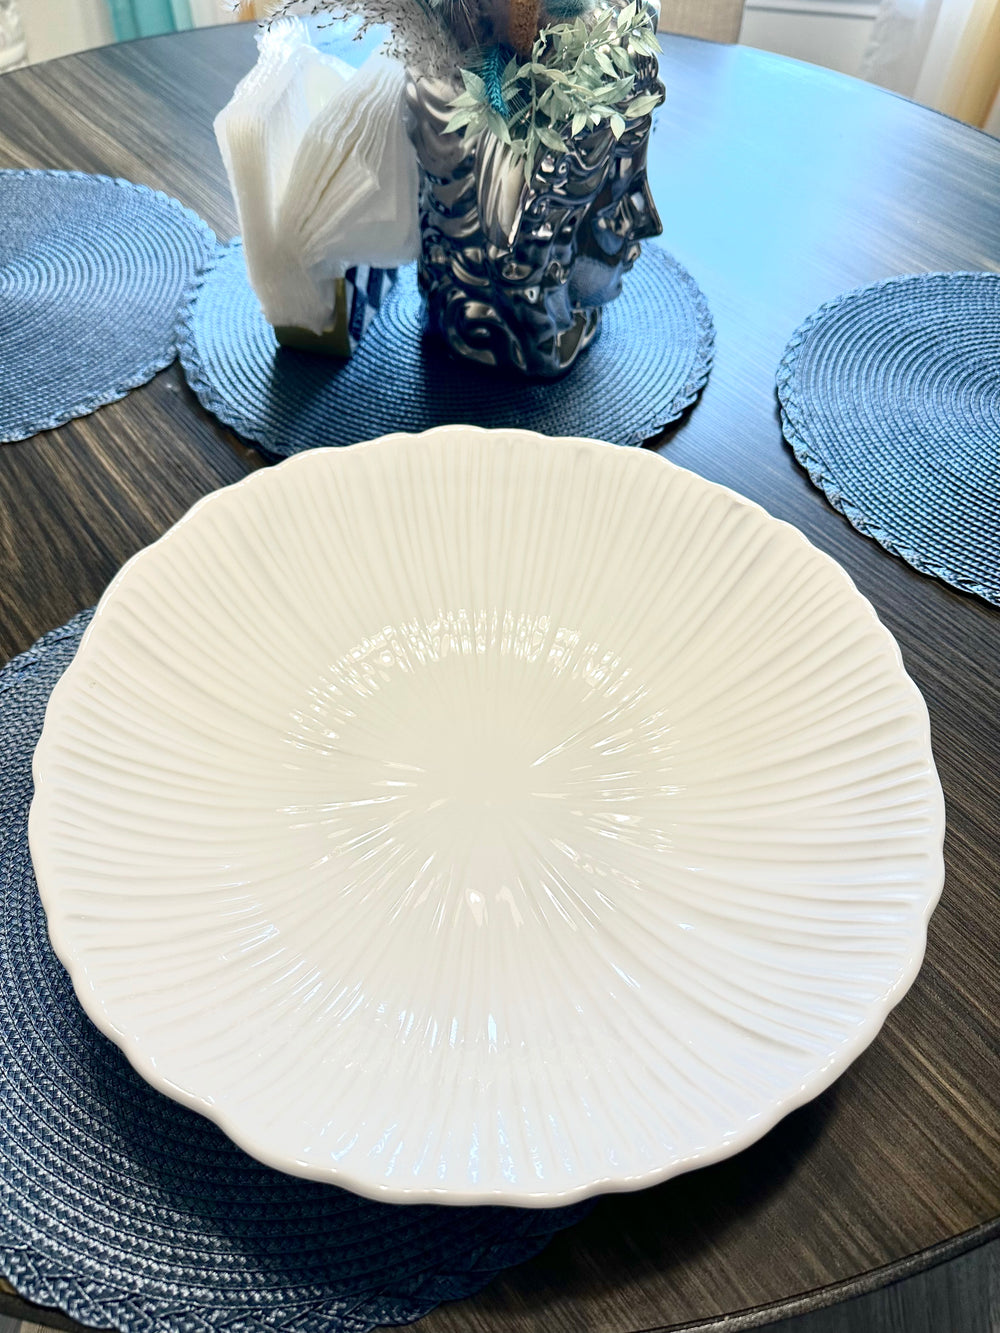 Made in Portugal White Ceramic Round Fruit Bowl Holder - Large